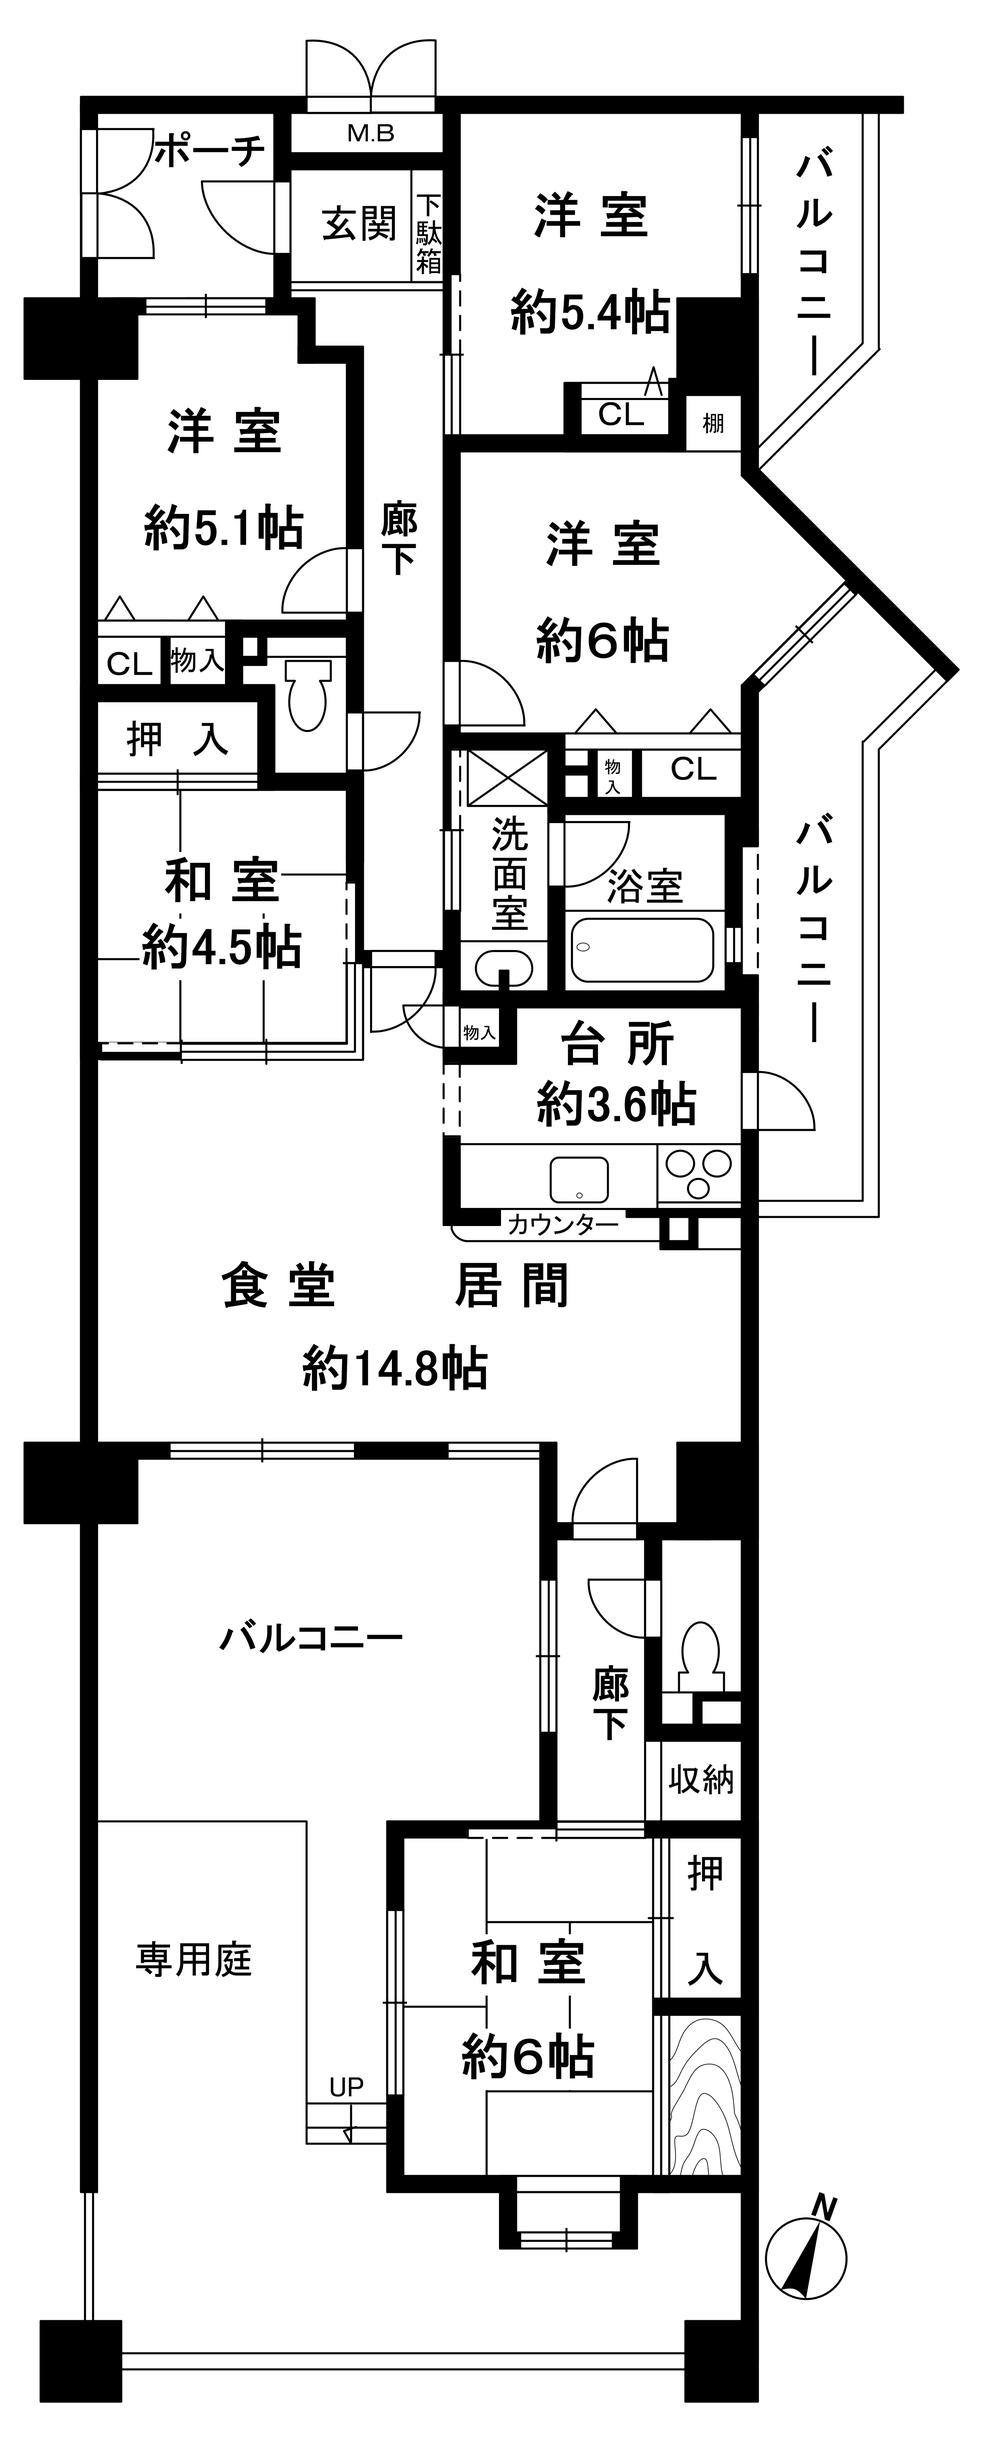 Floor plan. 5LDK, Price 24,800,000 yen, Footprint 104.68 sq m , Balcony area 20.95 sq m